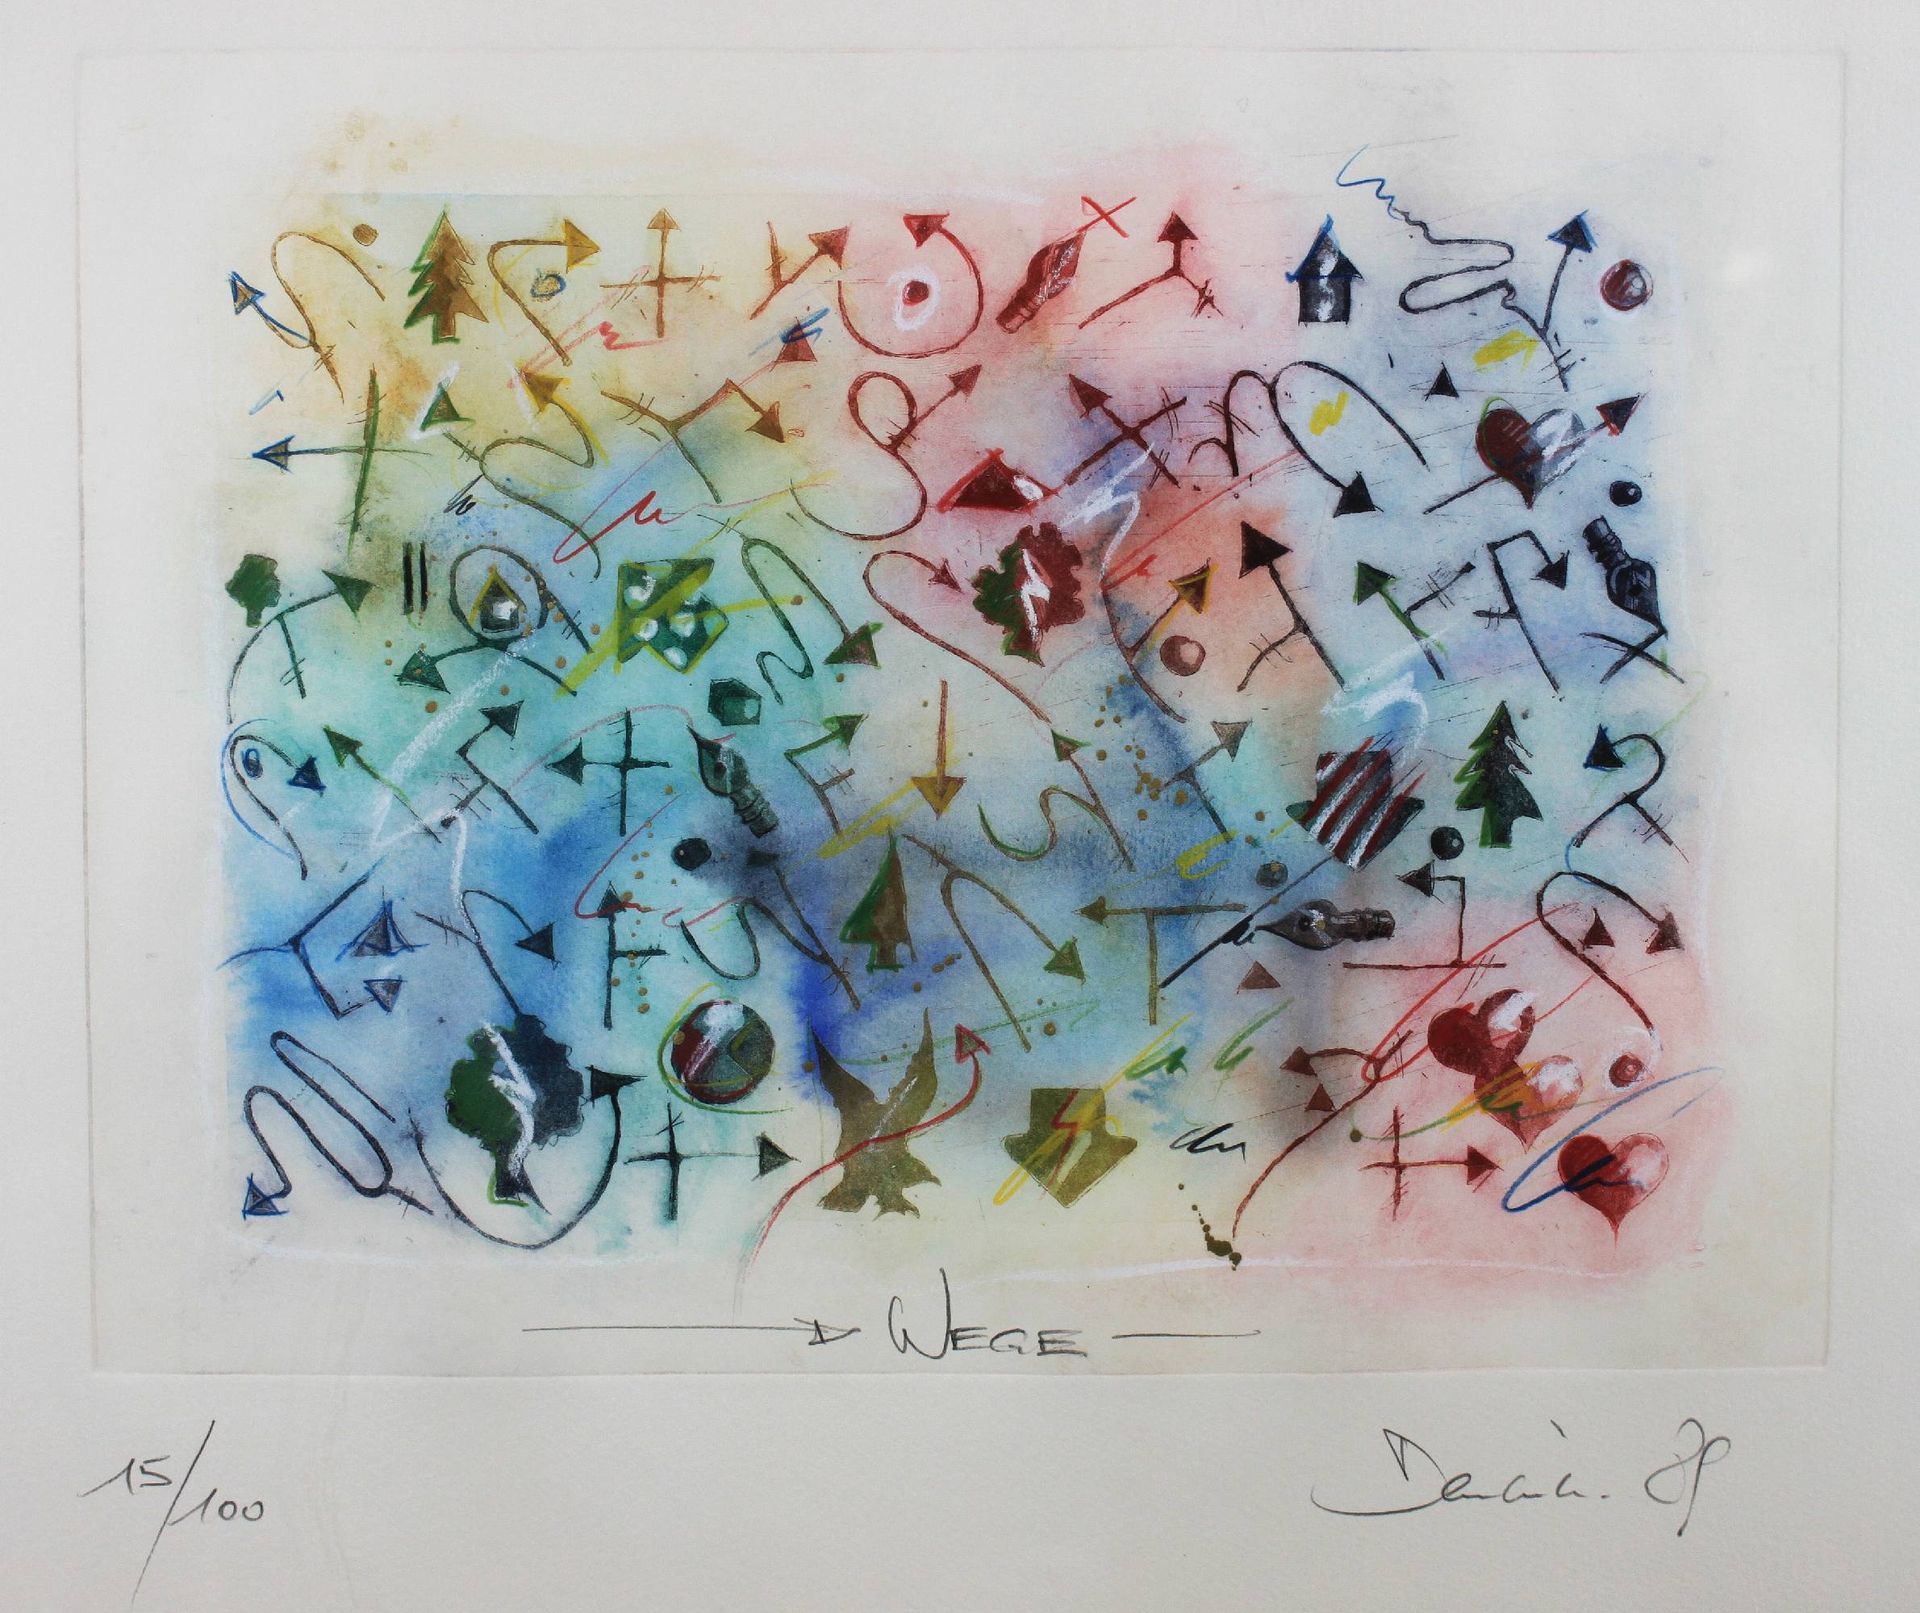 Unbekannter Künstler, Wege, 1989, Gouache 未知艺术家，《Wege》，1989年，纸上水粉画，铅笔手写。(难以辨认），日&hellip;